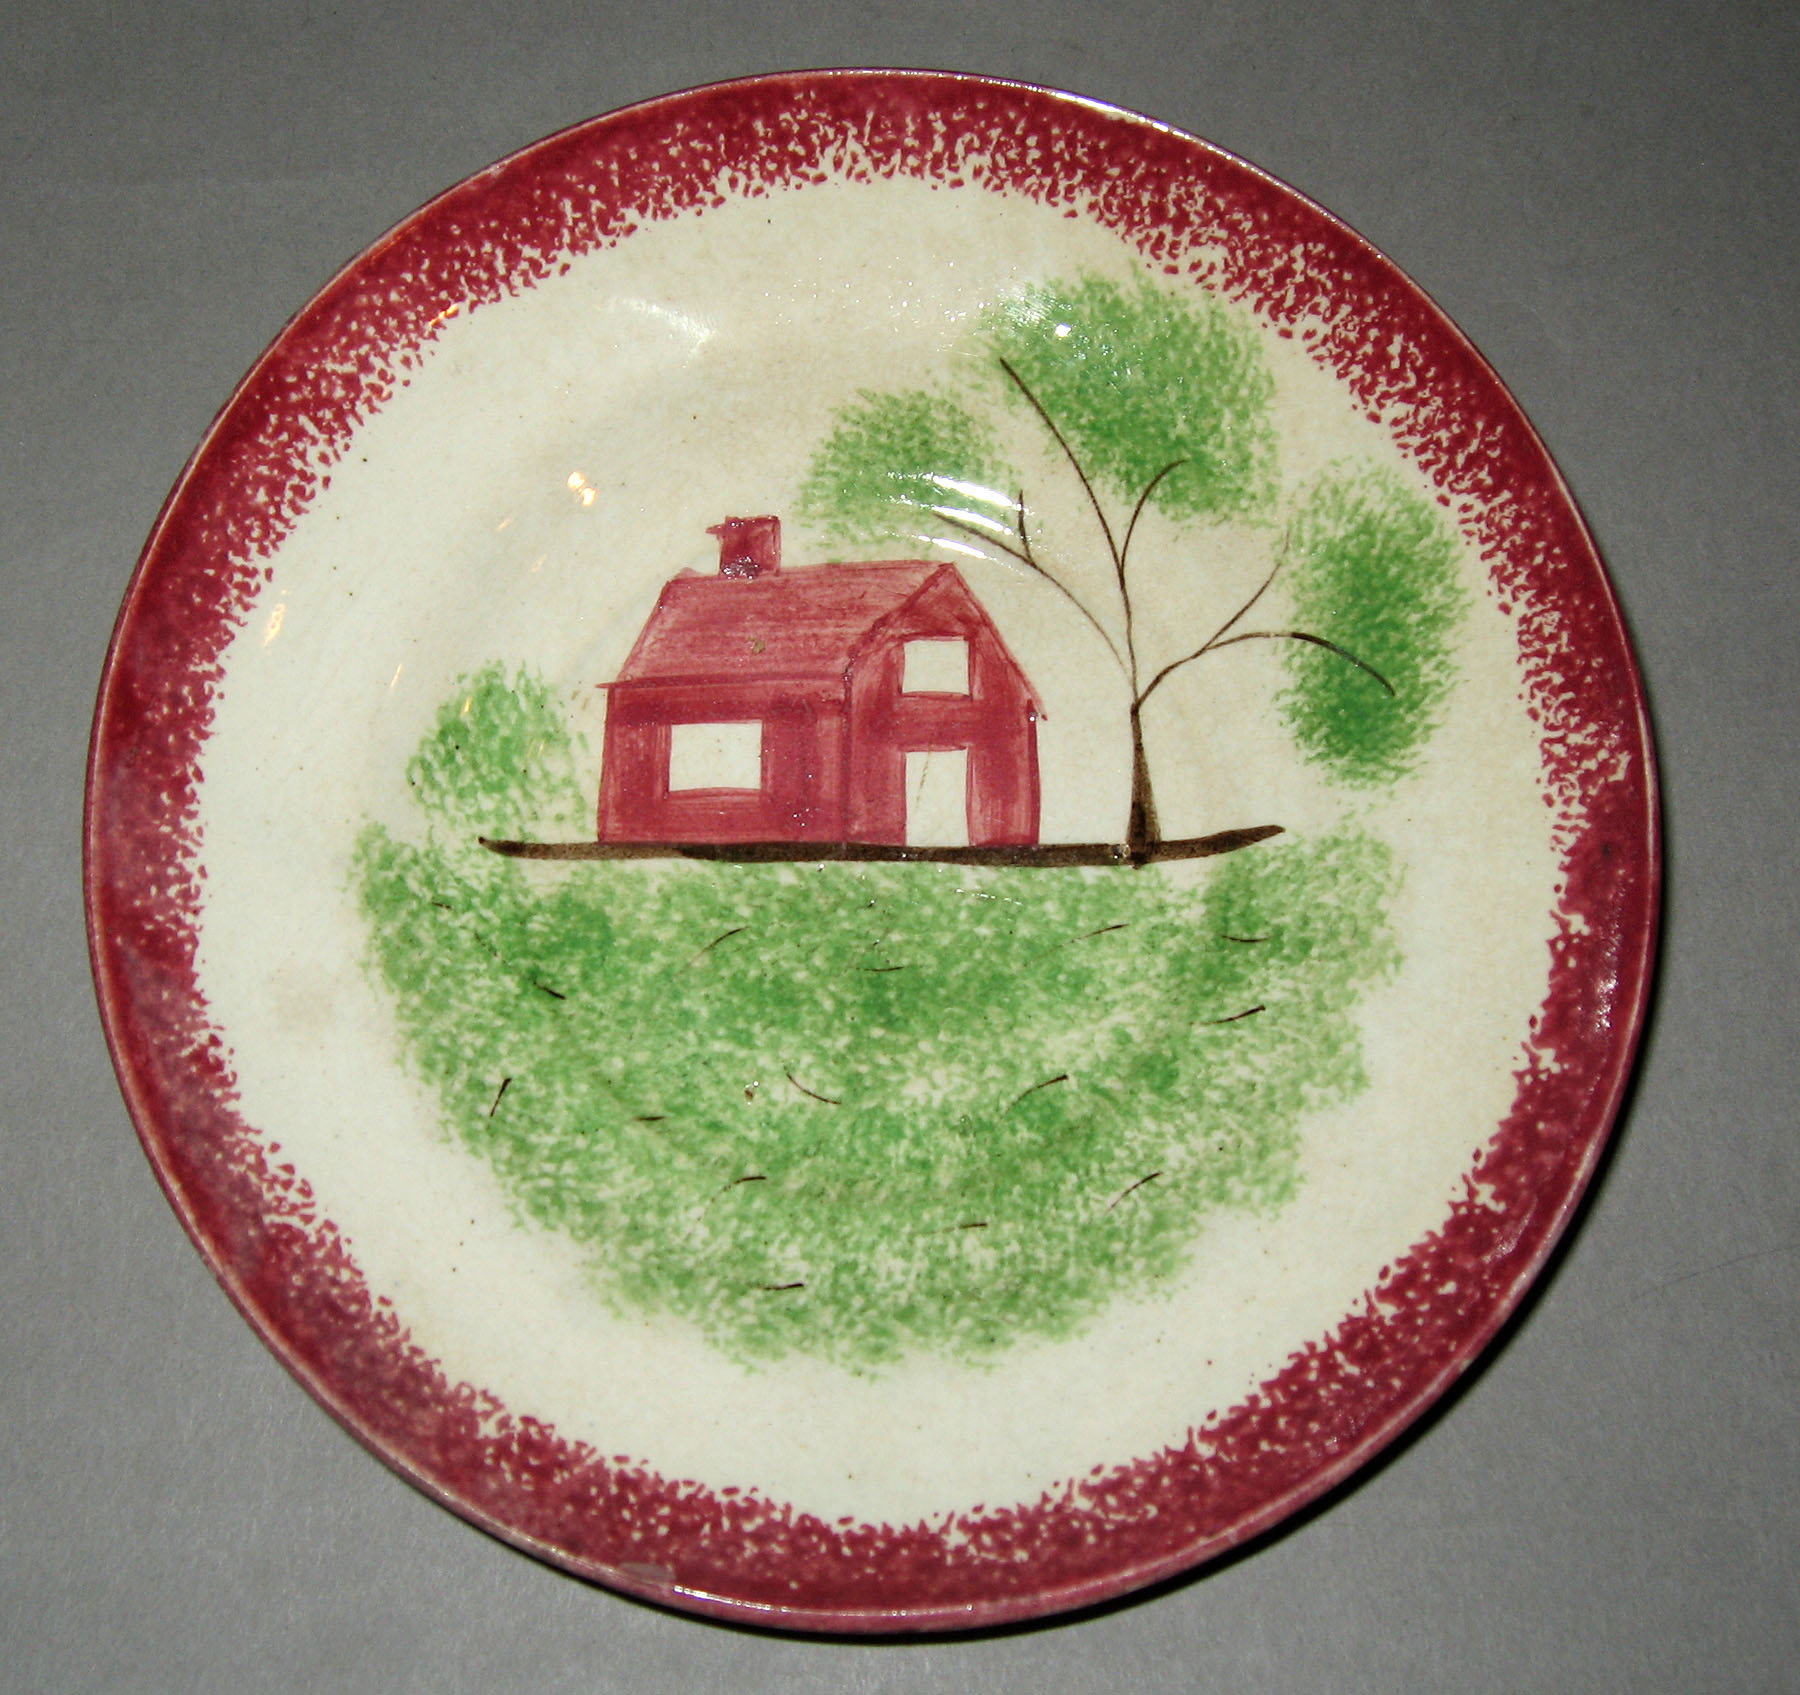 1965.0776.005 Pink spatterware schoolhouse pattern saucer